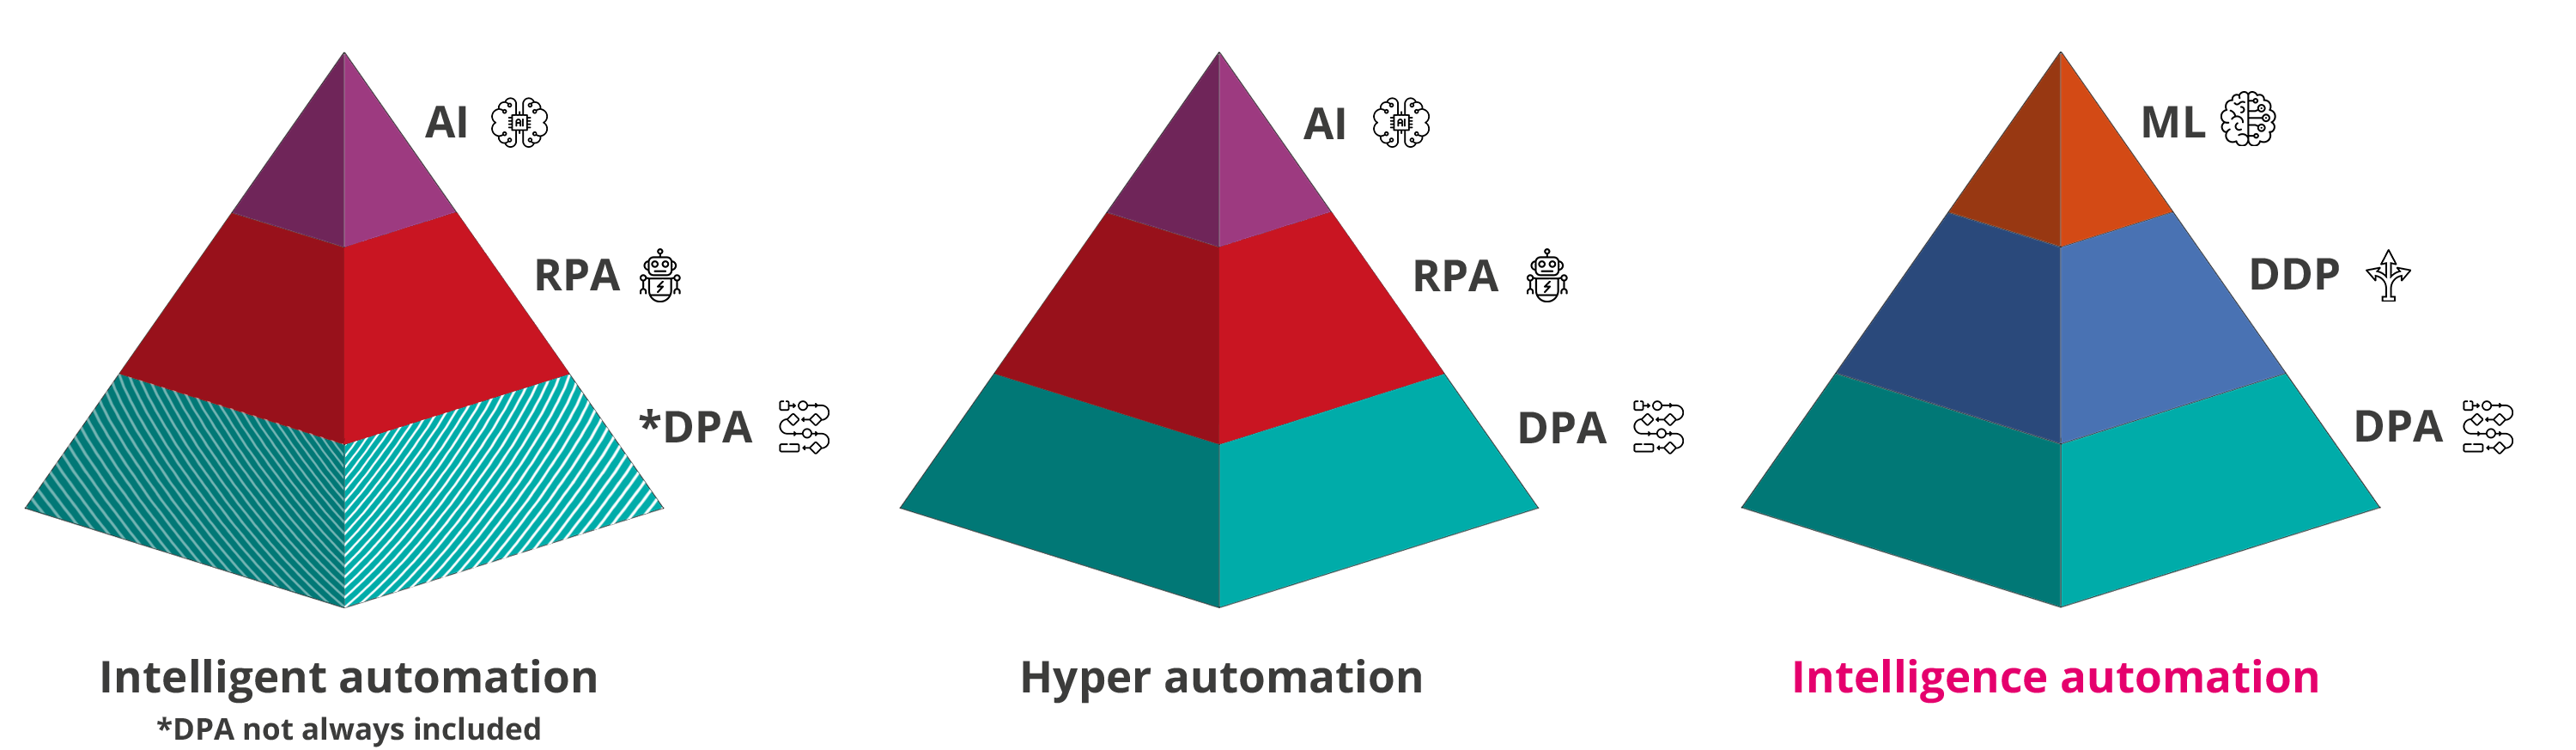 ai-powered automation vs intelligent automation vs hyper automation 